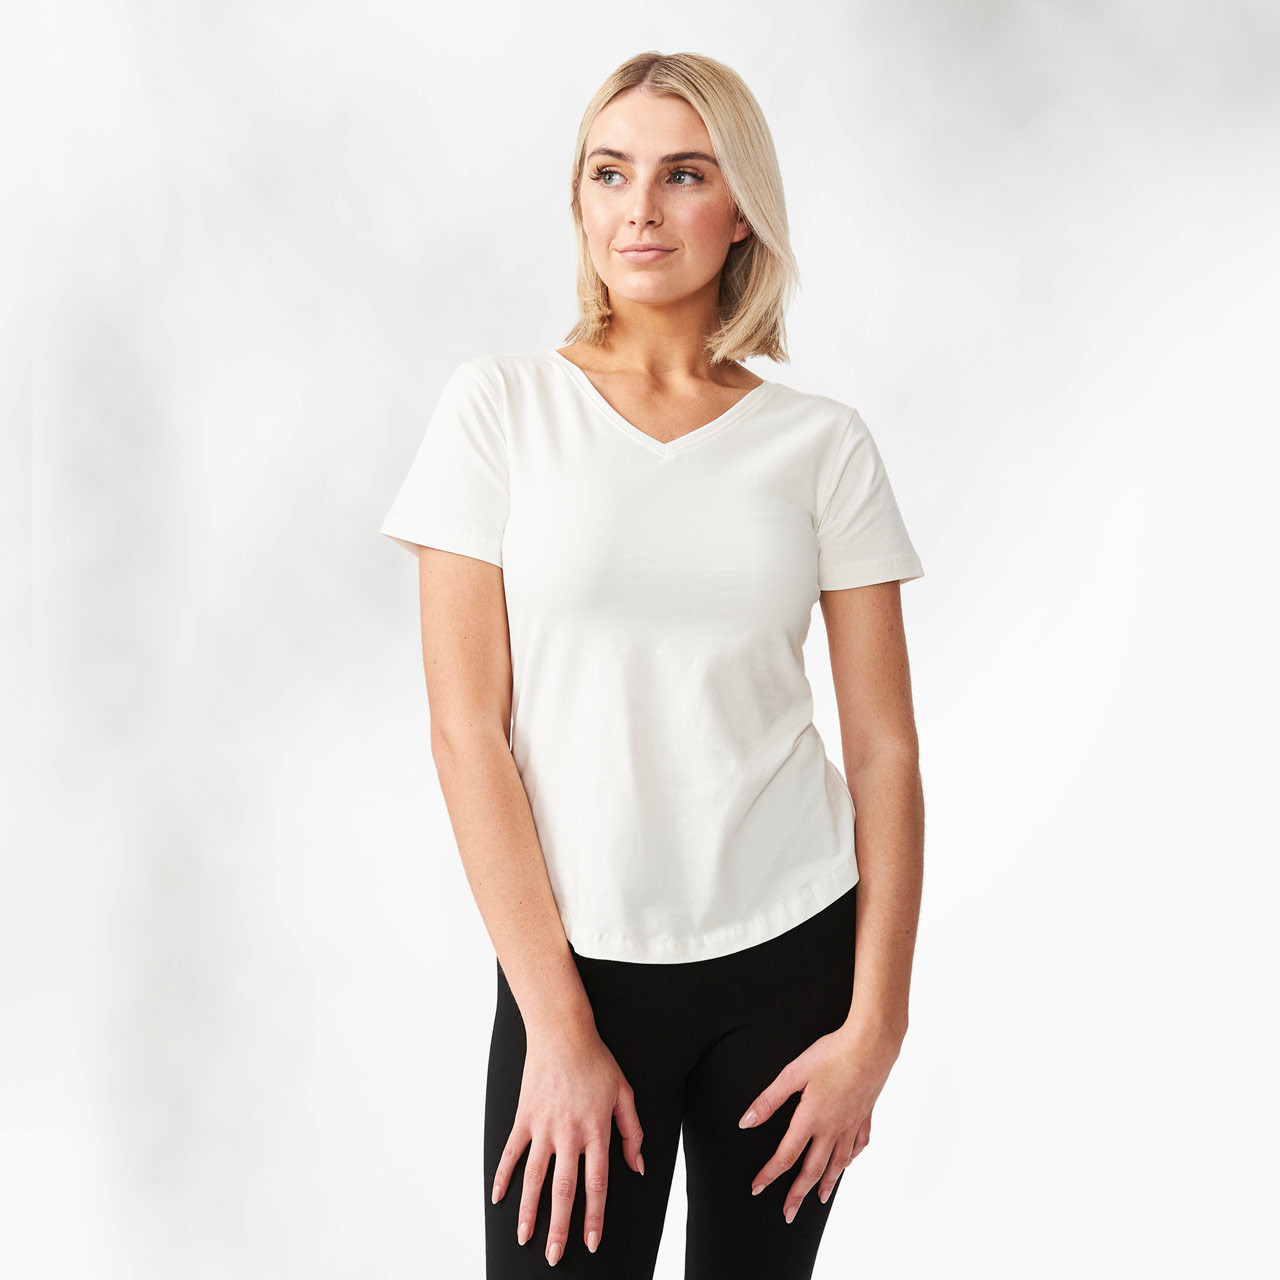 White Shirts for Women